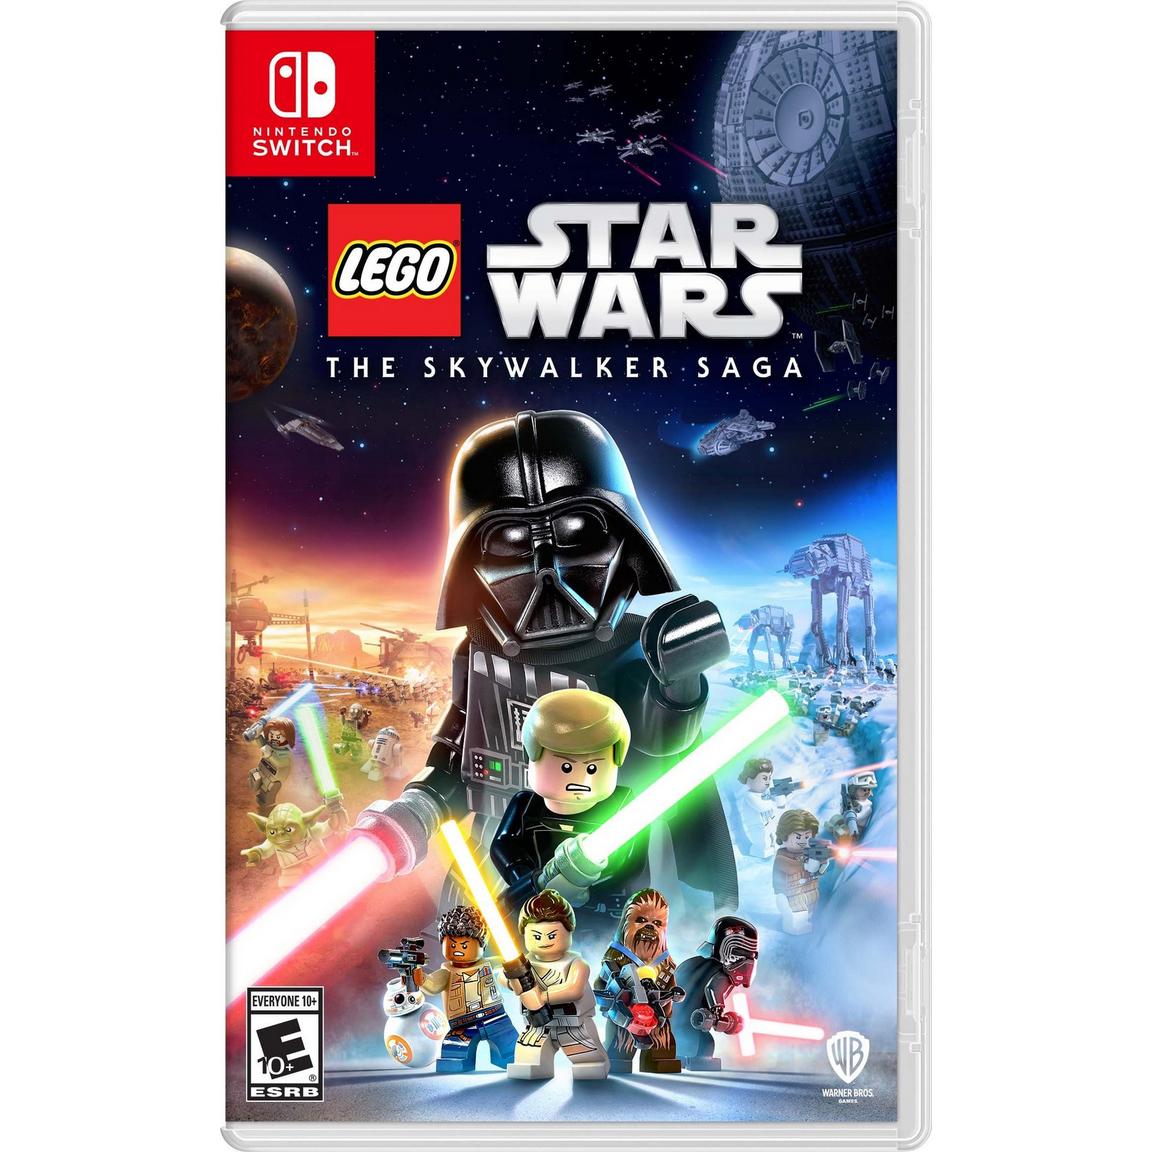 LEGO Star Wars: The Skywalker Saga - Nintendo Switch $49.40 + Free Ship